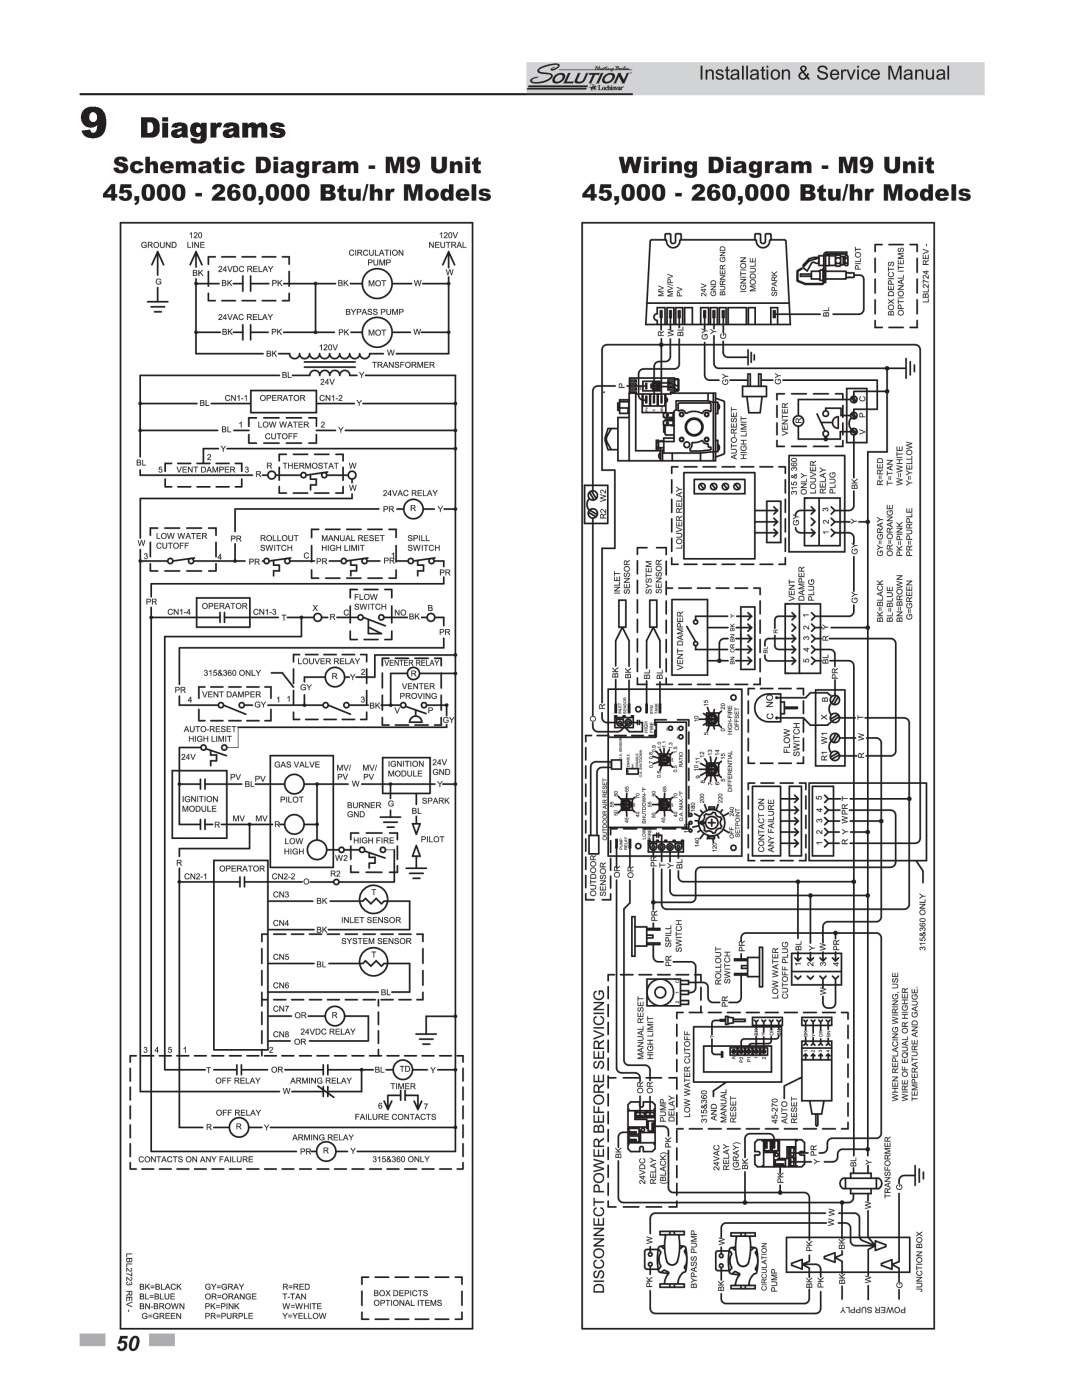 Lochinvar service manual Diagrams, Schematic Diagram - M9 Unit, 45,000 - 260,000 Btu/hr Models, Wiring Diagram - M9 